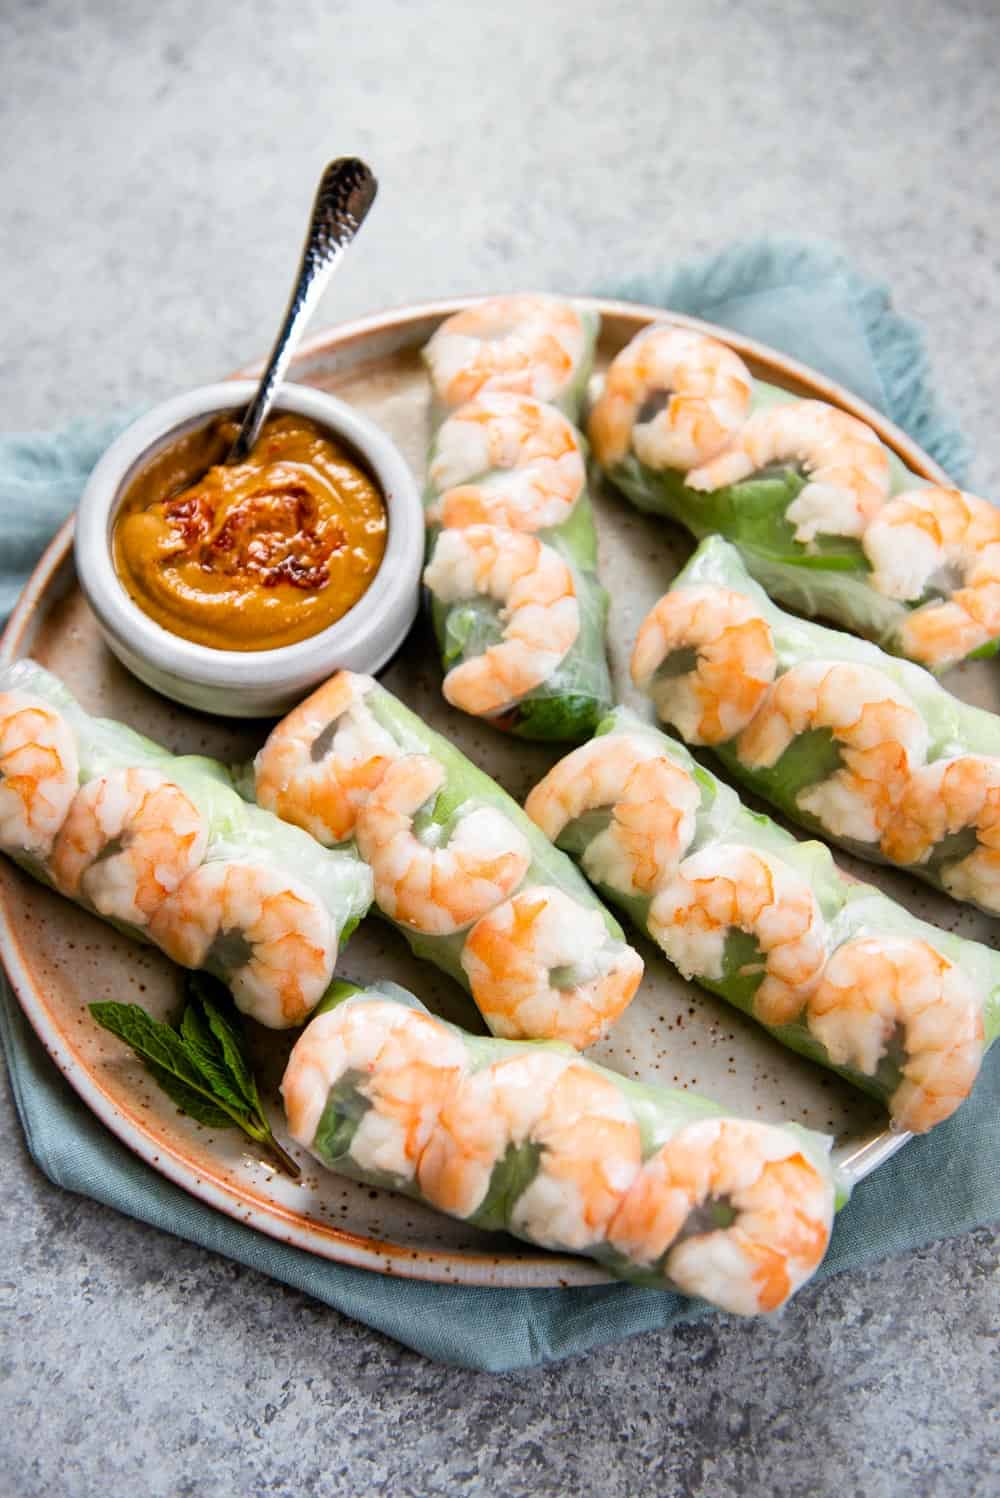 Fresh Vietnamese Spring Rolls with Shrimp, vegetables and peanut sauce